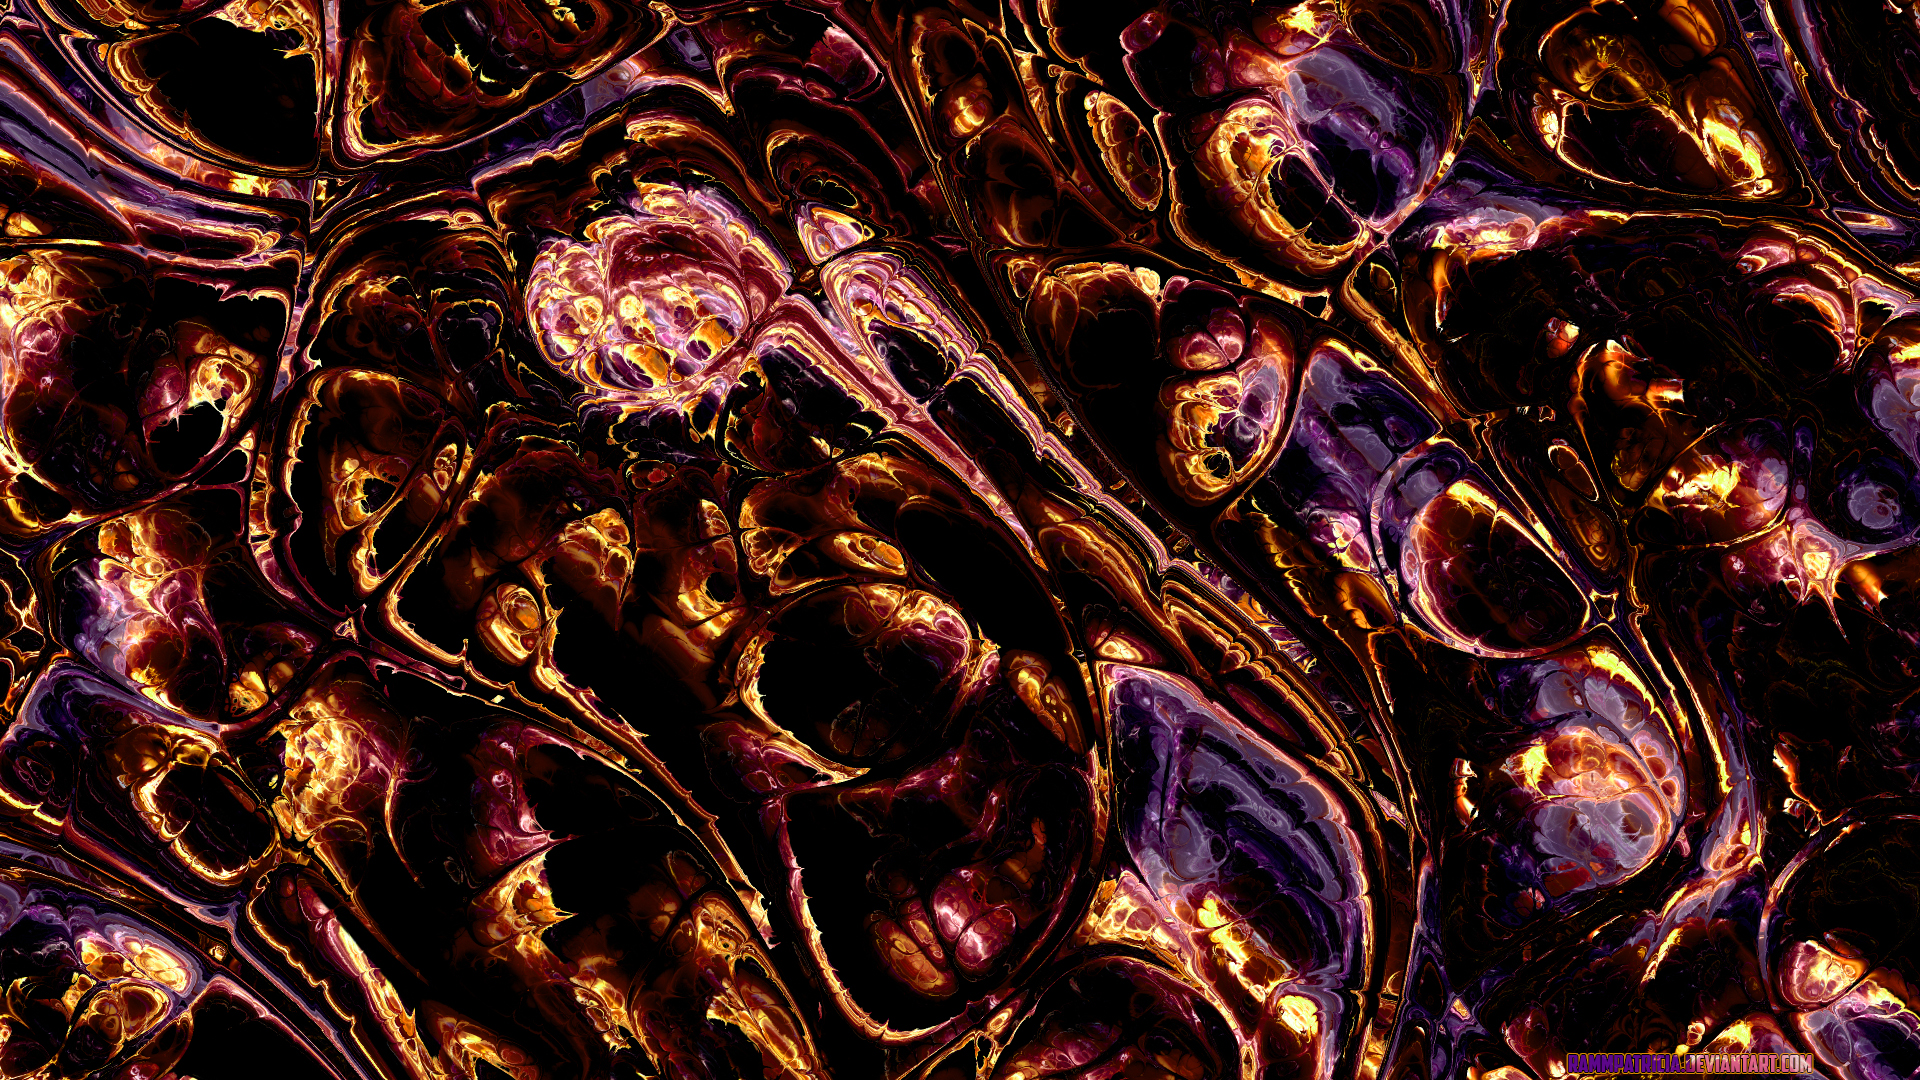 General 1920x1080 RammPatricia abstract horror Halloween spooky creepy liquid nightmare watermarked